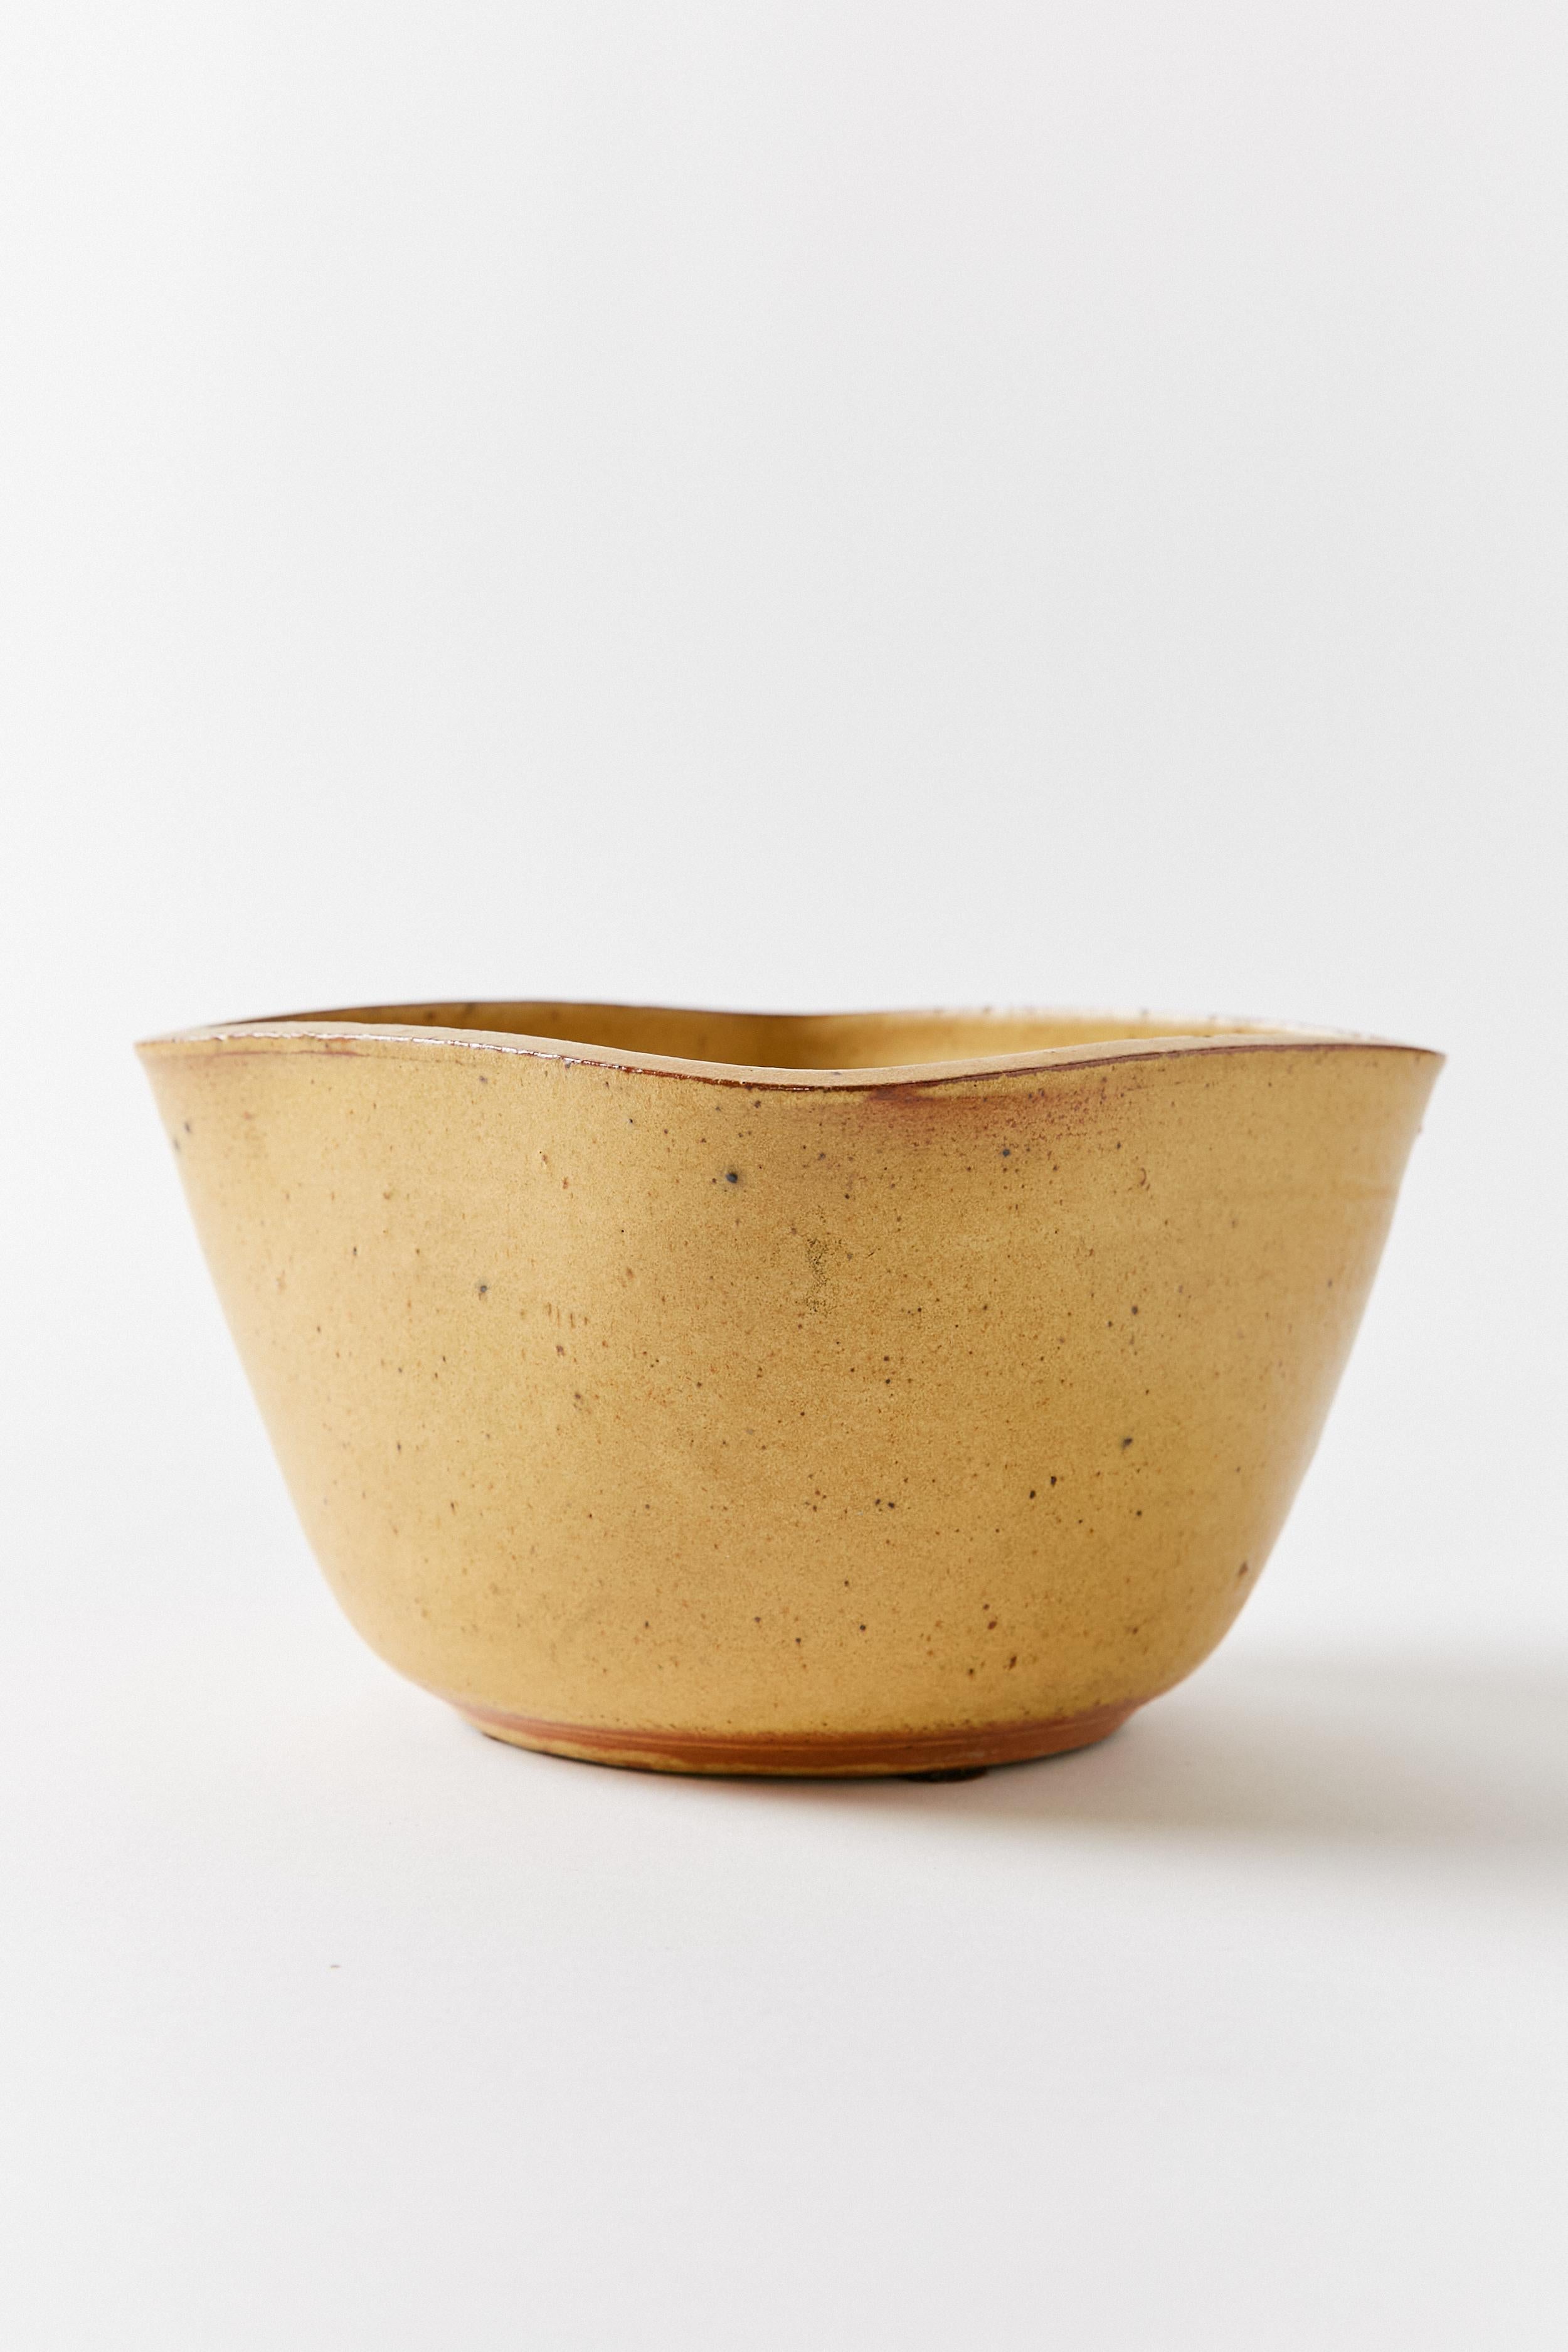 American Square Lip Ceramic Bowl in Burnt Yellow For Sale